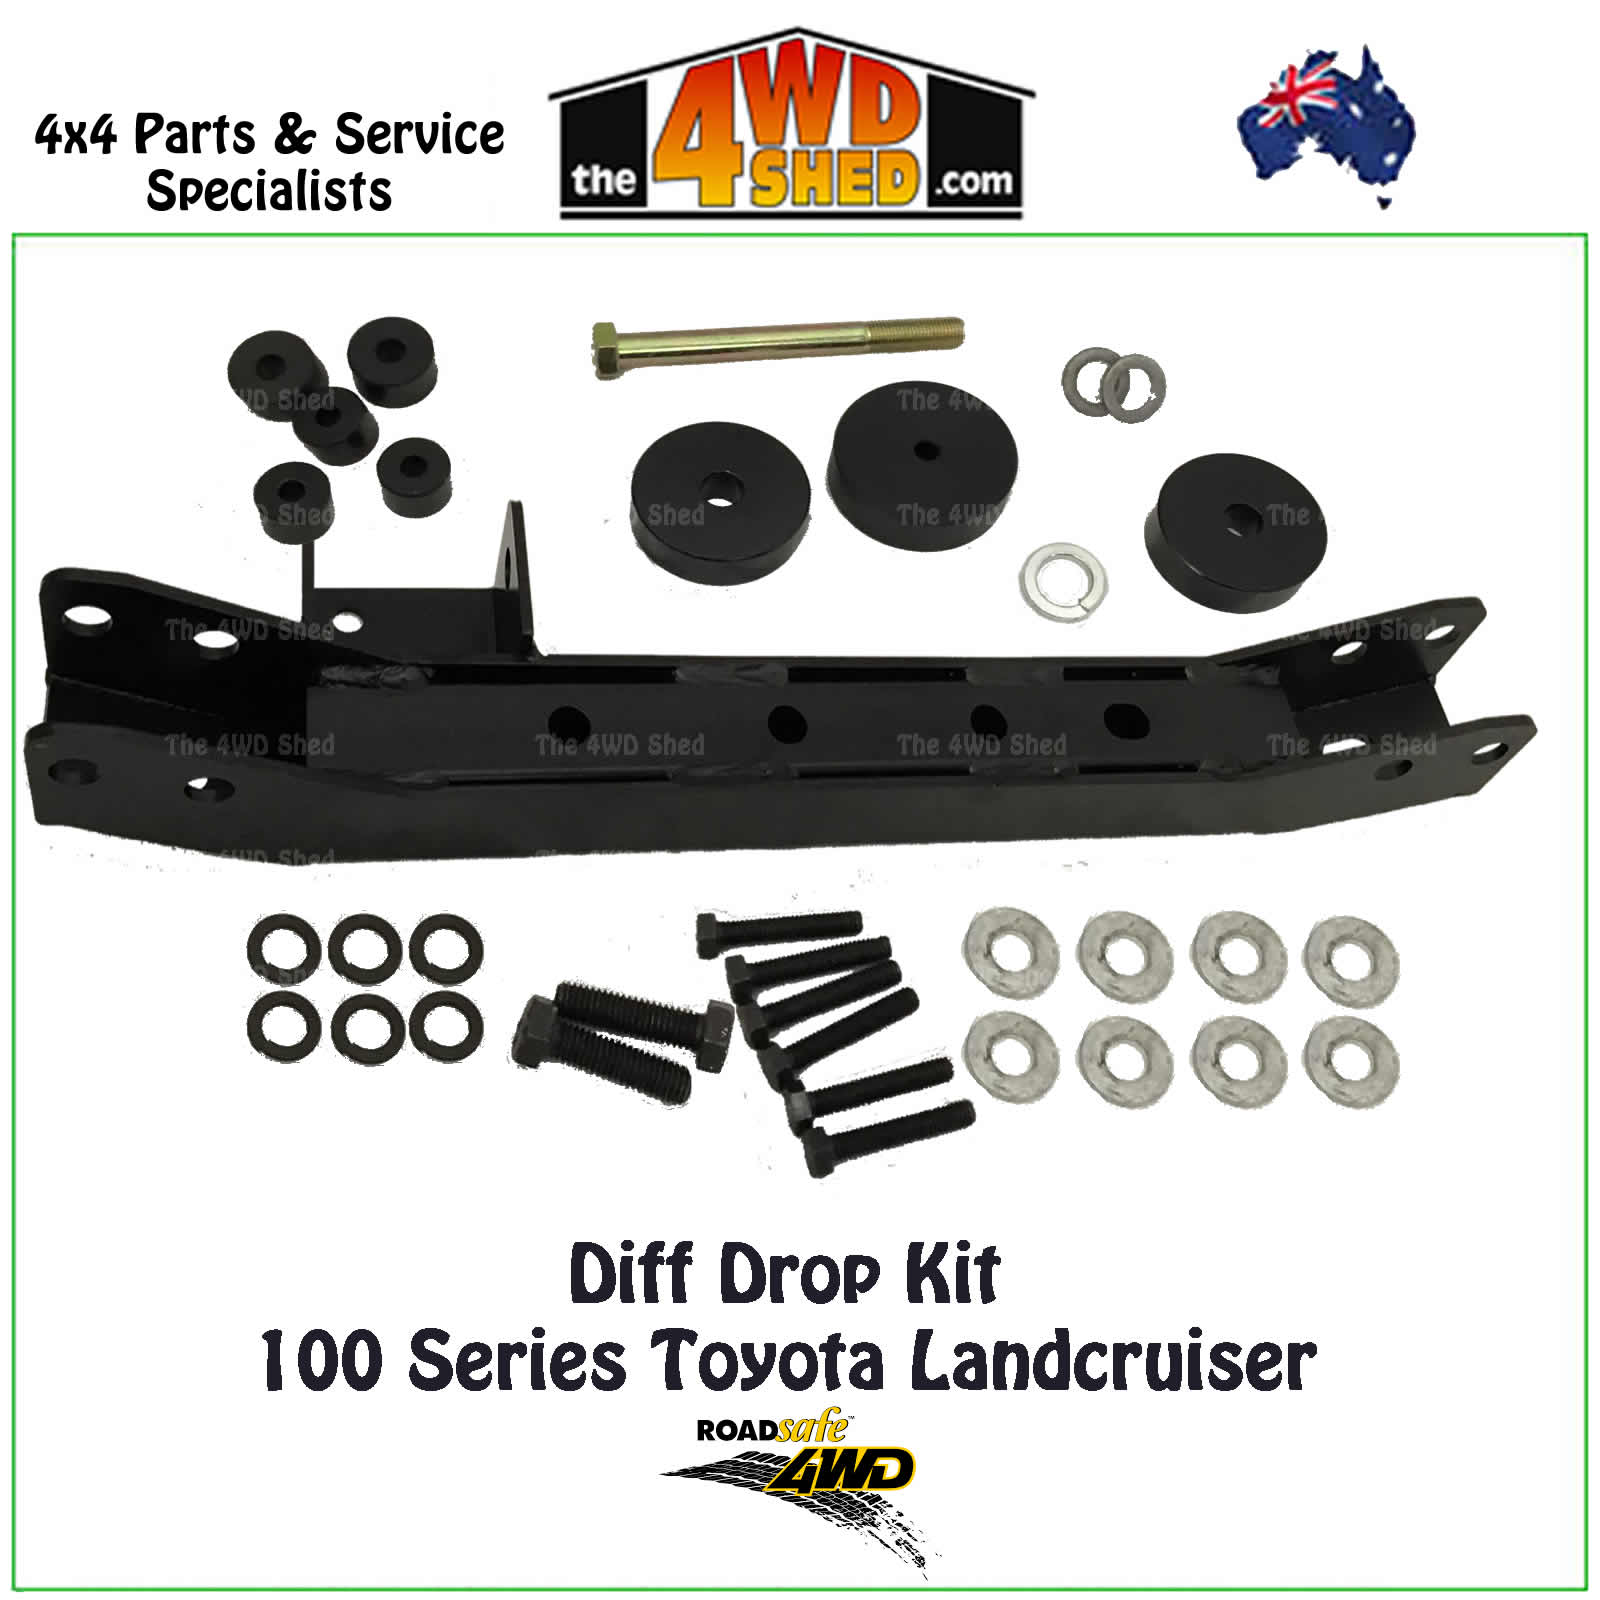 Diff Drop Kit 100 Series Toyota Landcruiser